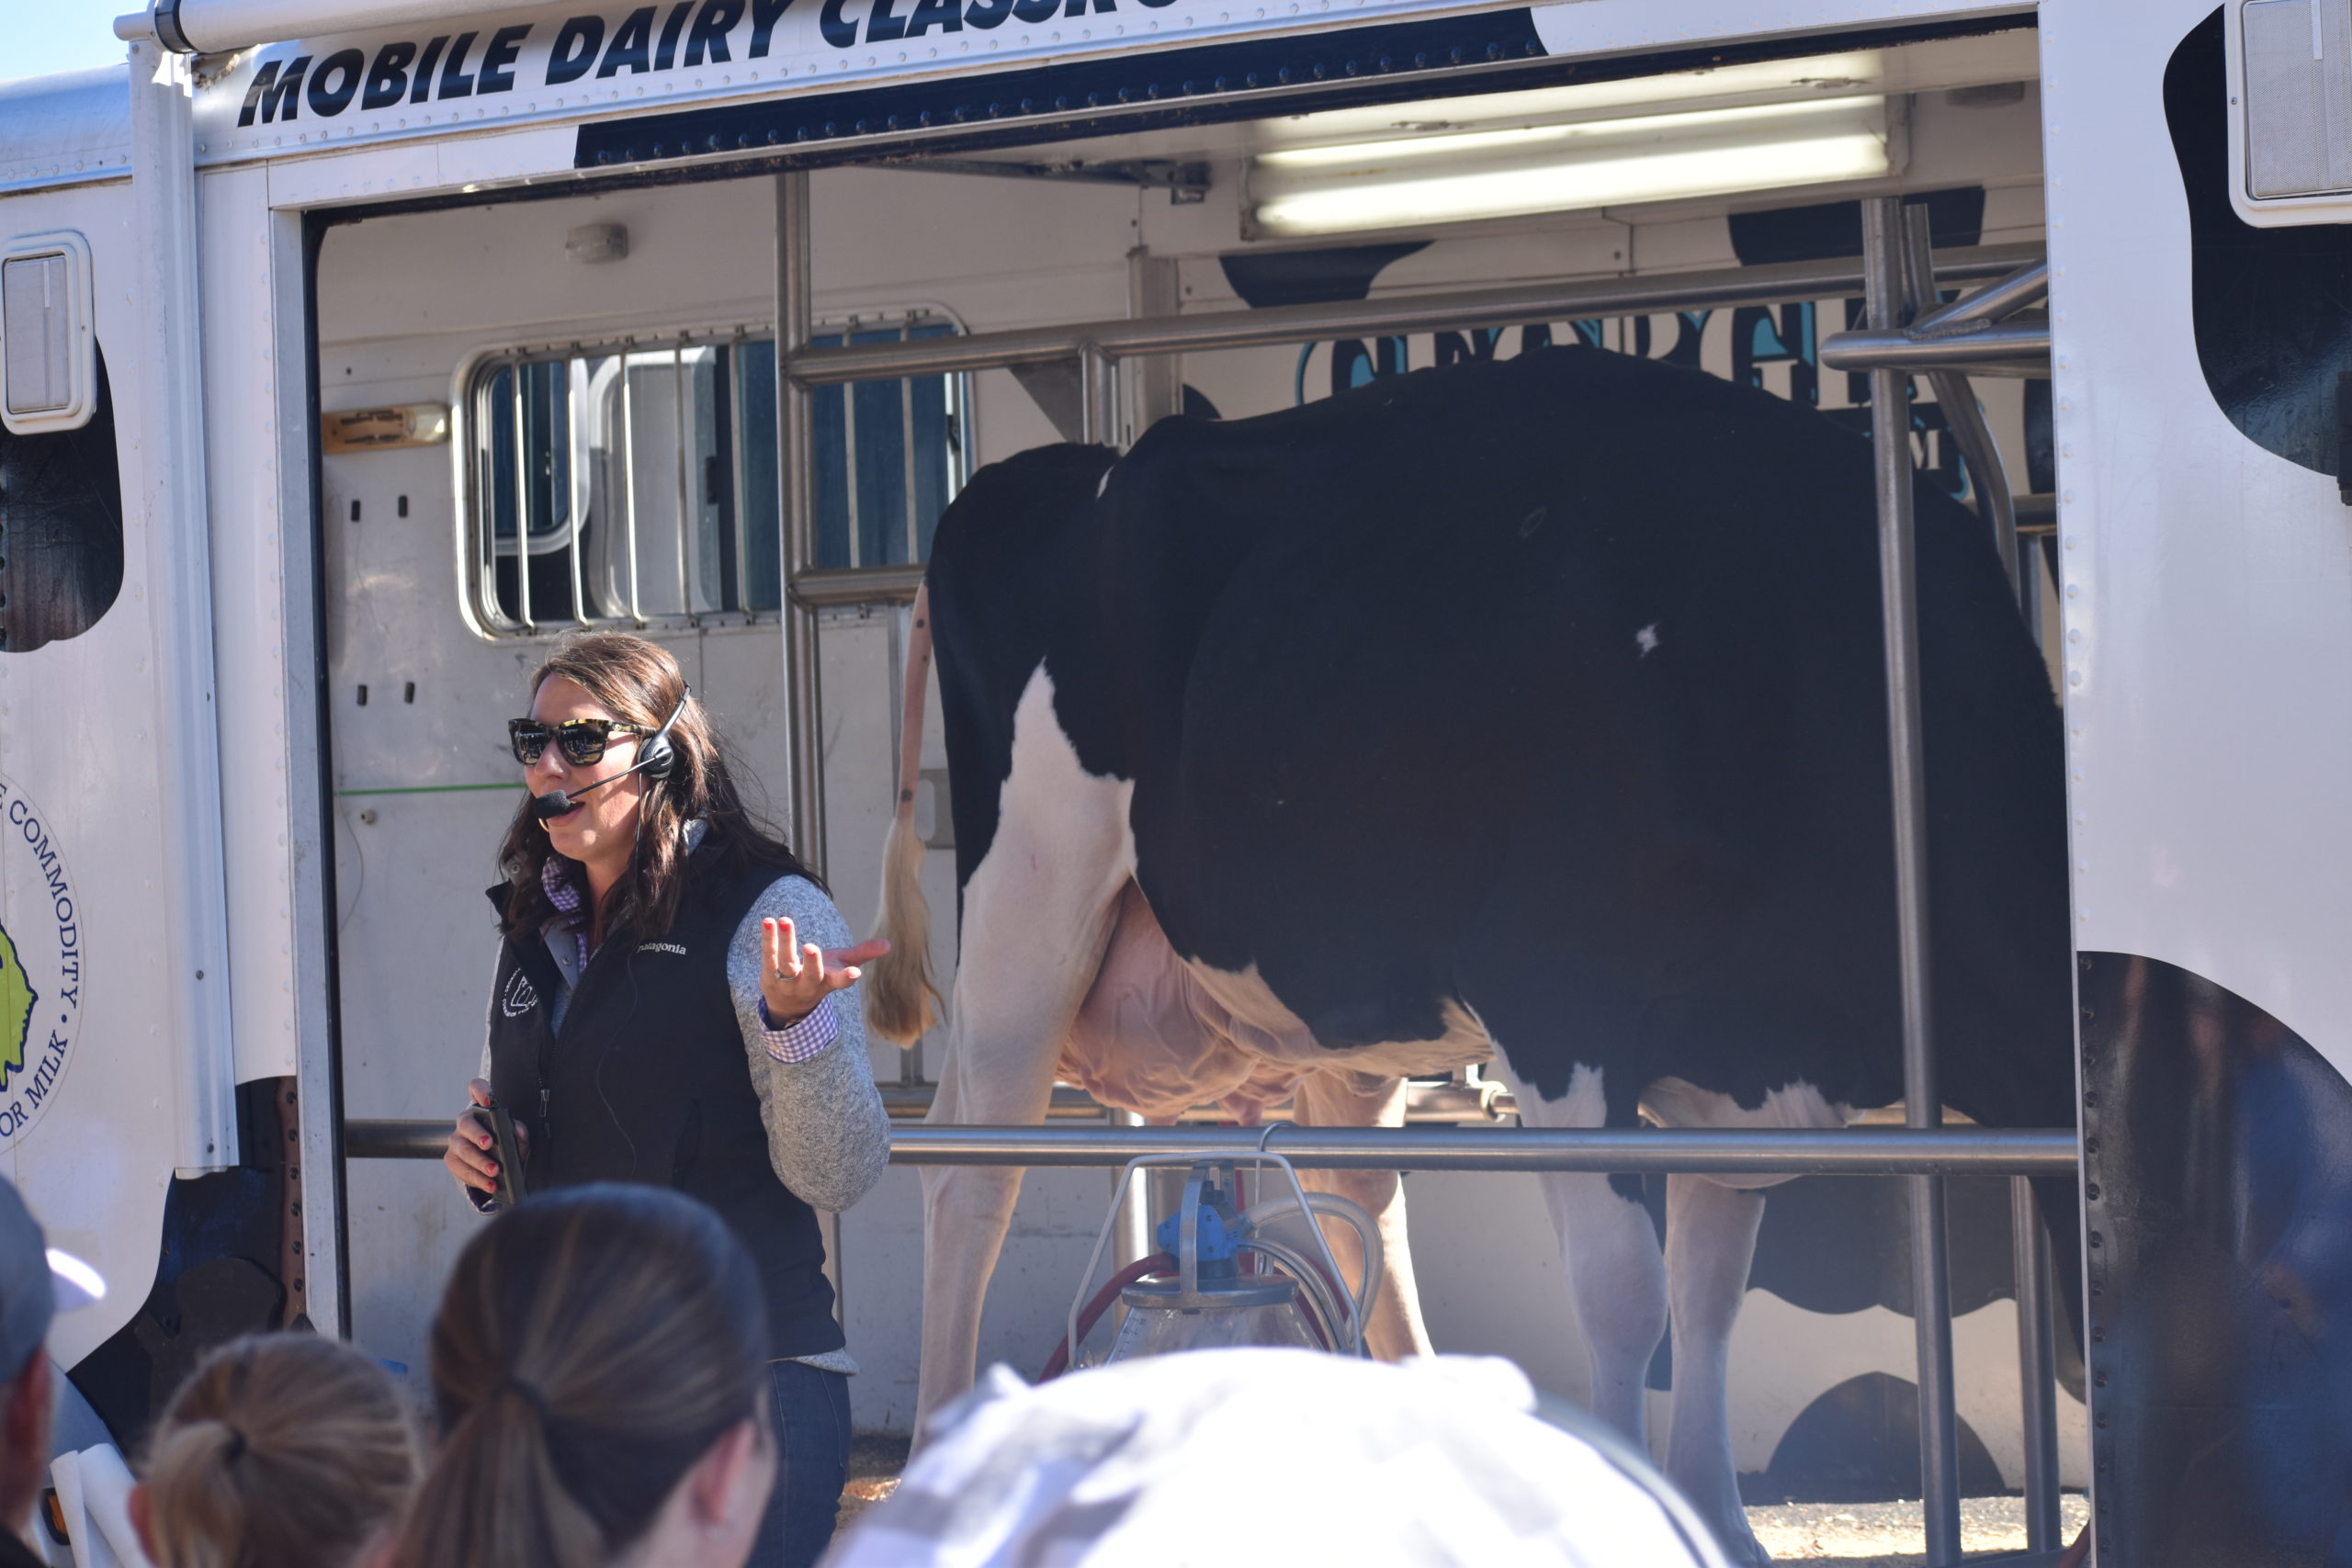 sunbelt ag expo mobile dairy classroom